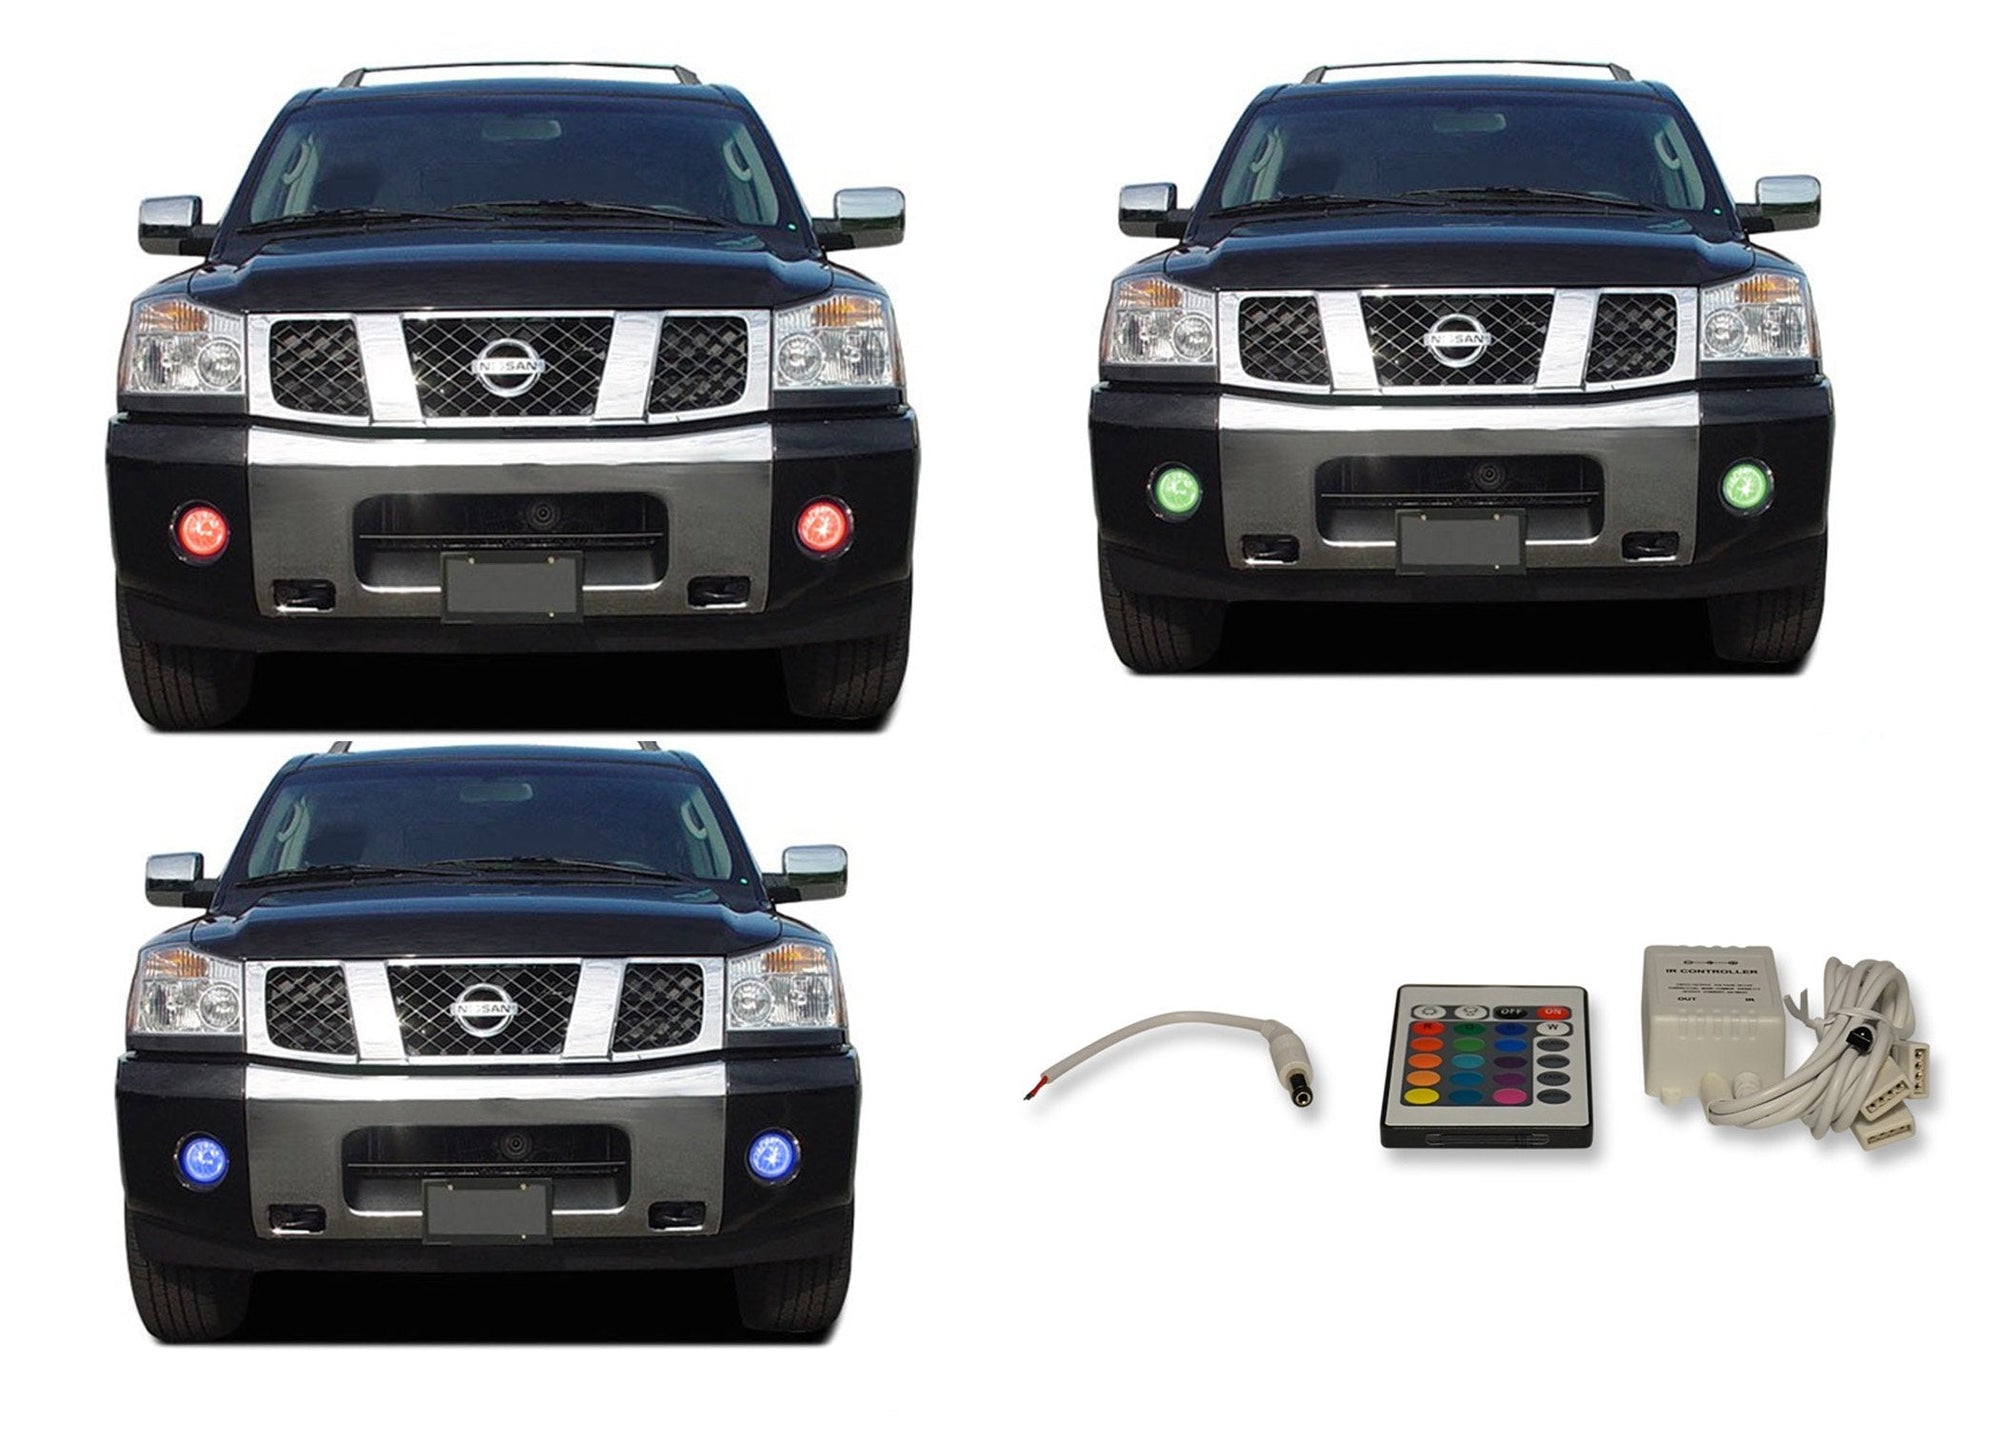 Nissan-Armada-2004, 2005, 2006, 2007-LED-Halo-Fog Lights-RGB-IR Remote-NI-AR0407-V3FIR